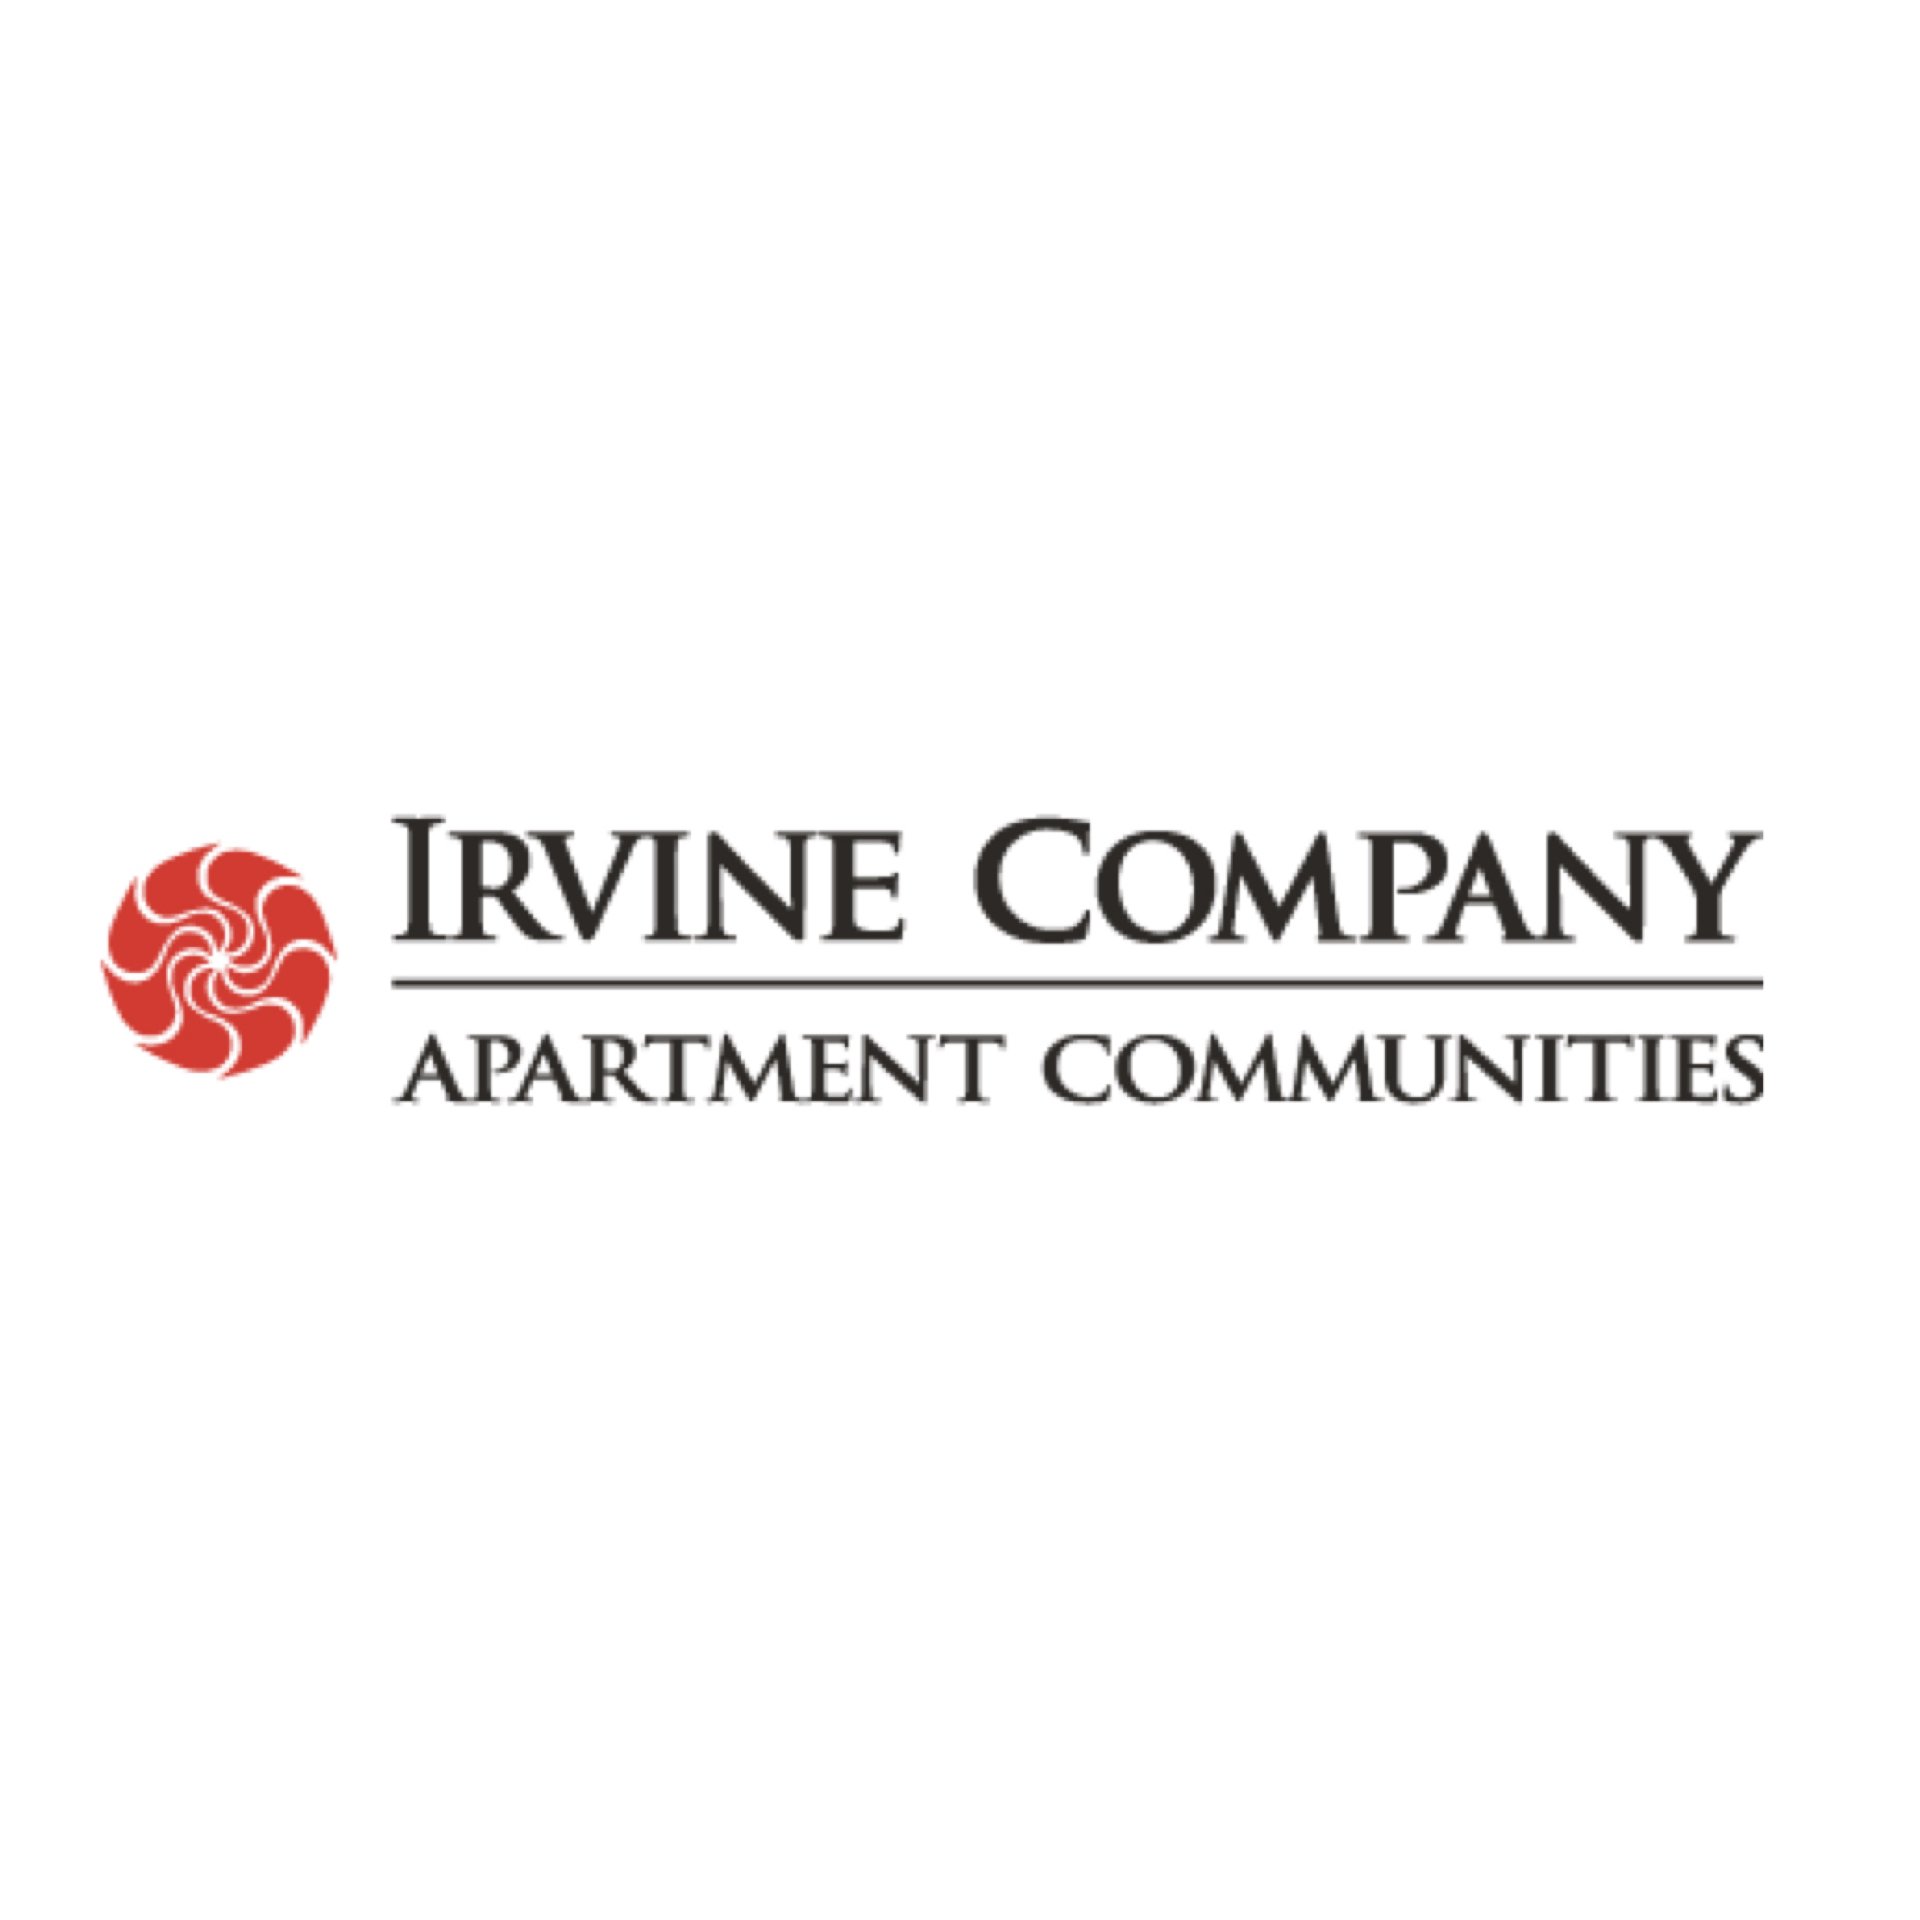 Irvine Company Apartment Communities